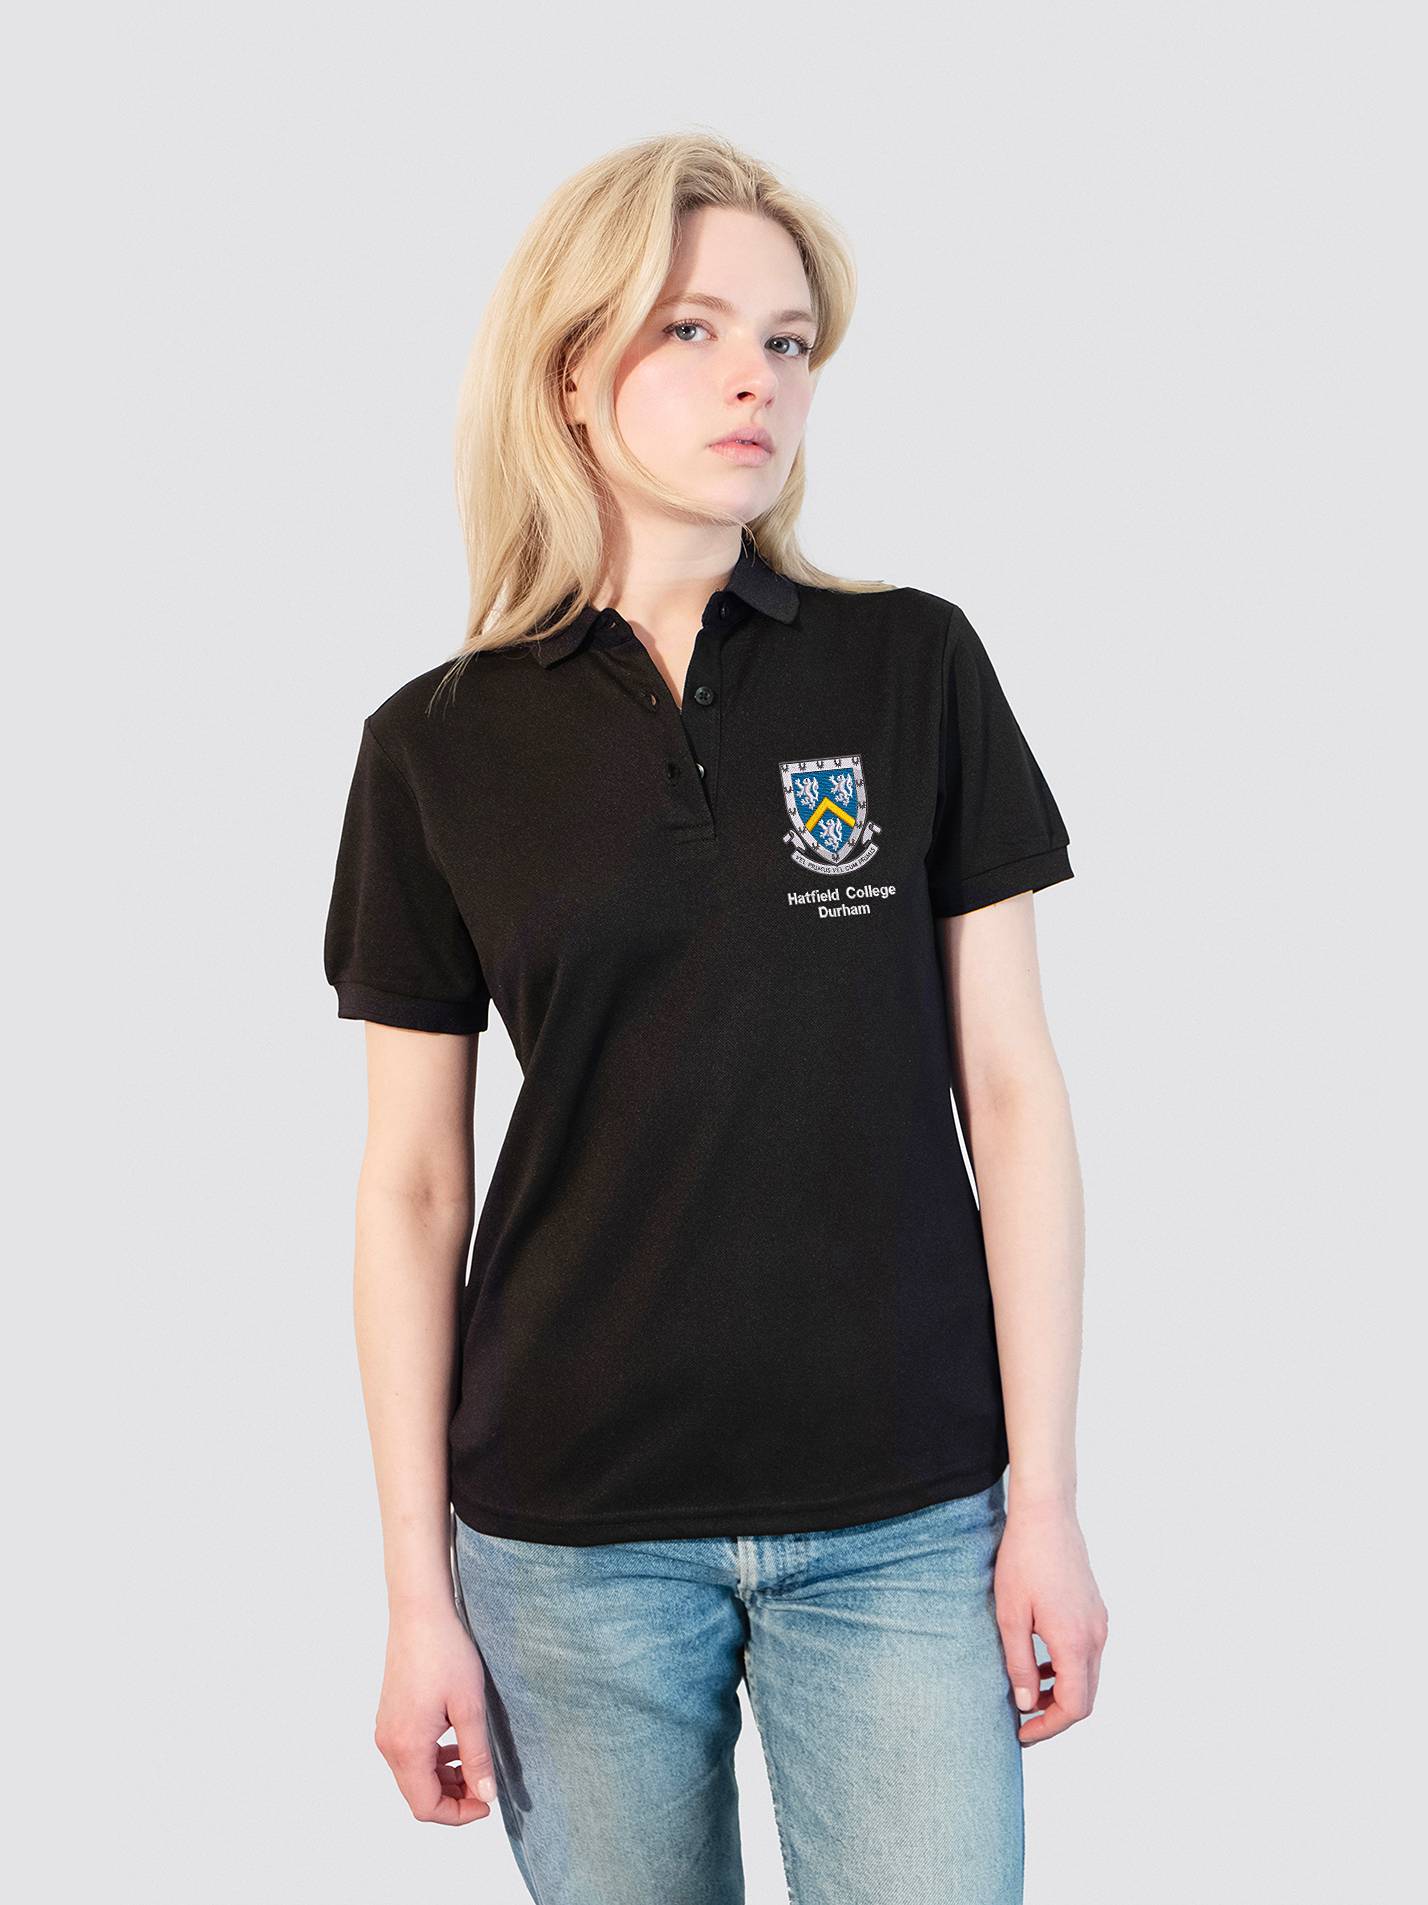 Hatfield College Durham Sustainable Ladies Polo Shirt